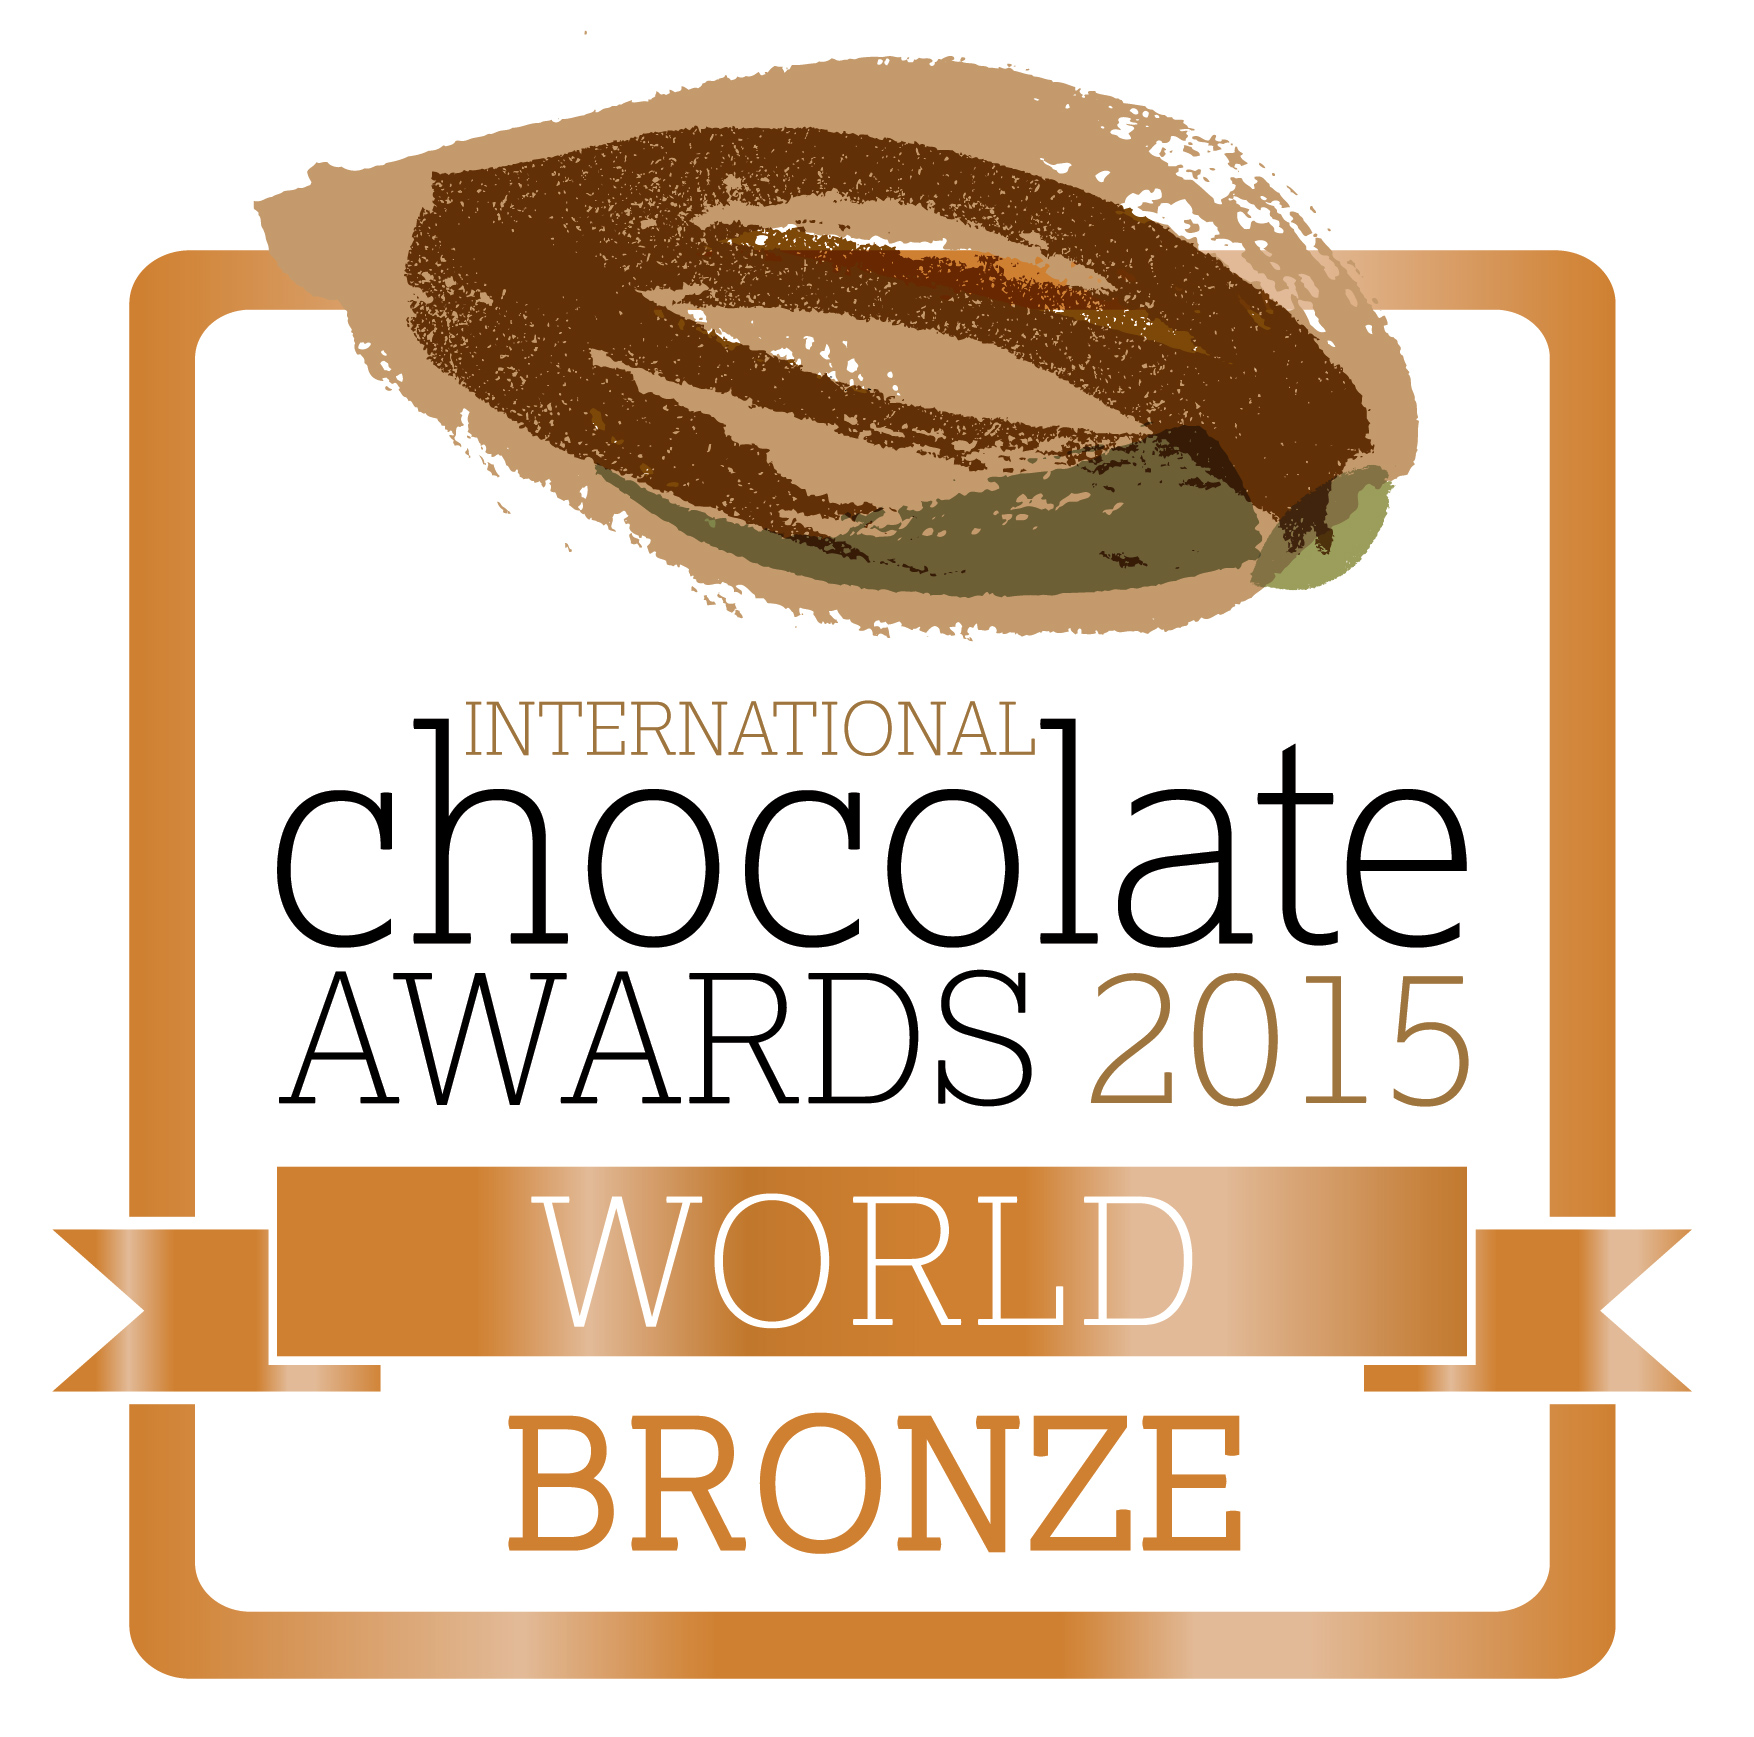 International Chocolate Awards 2015 - Bronze - World RGB - web.jpg